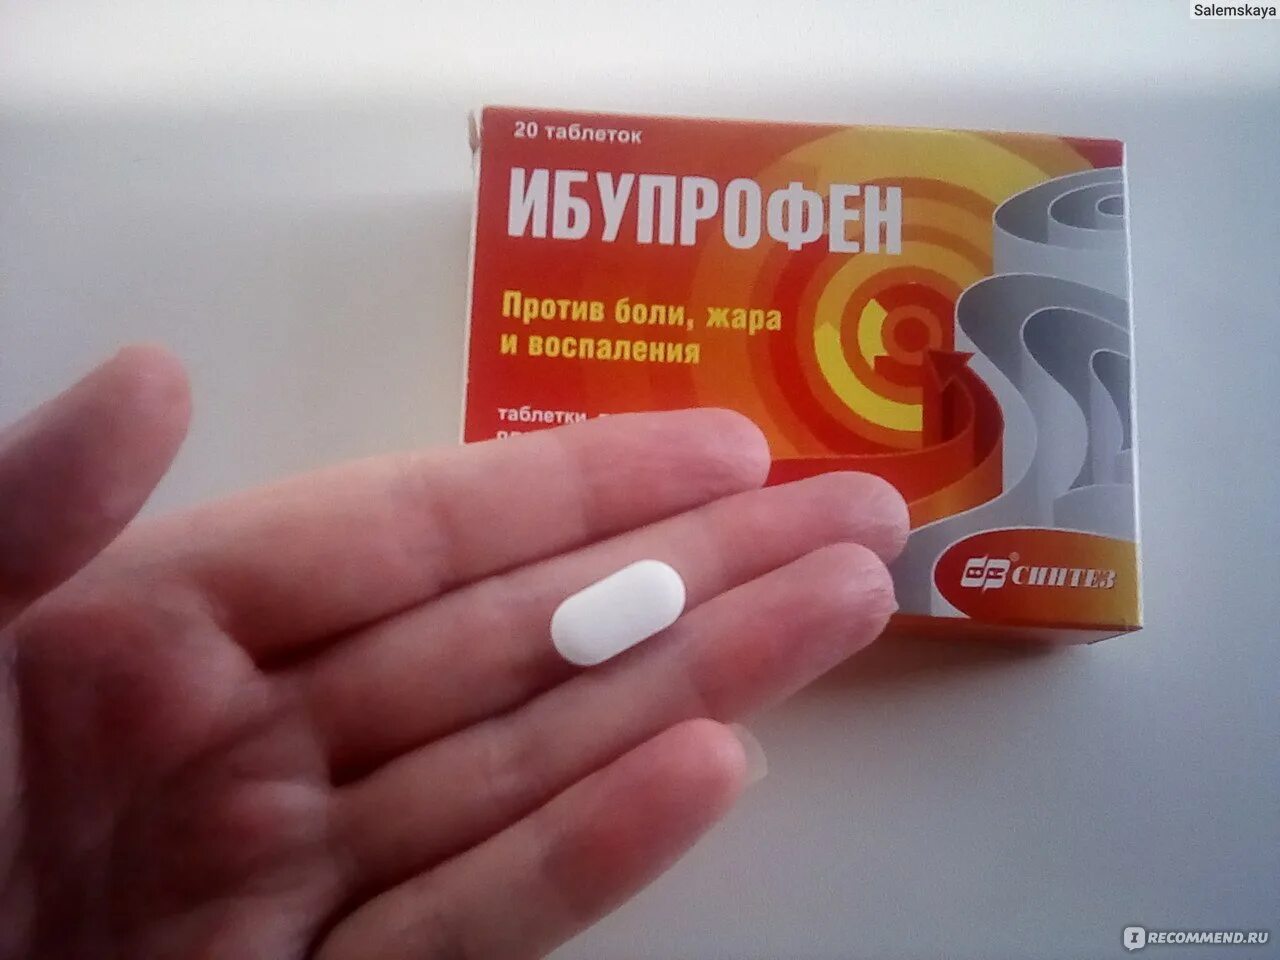 Ибупрофен понижает. Ибупрофен таблетки. Ибупрофен от головной боли. Таблетки от боли головы ибупрофен. Препарат от головной боли с ибупрофеном.